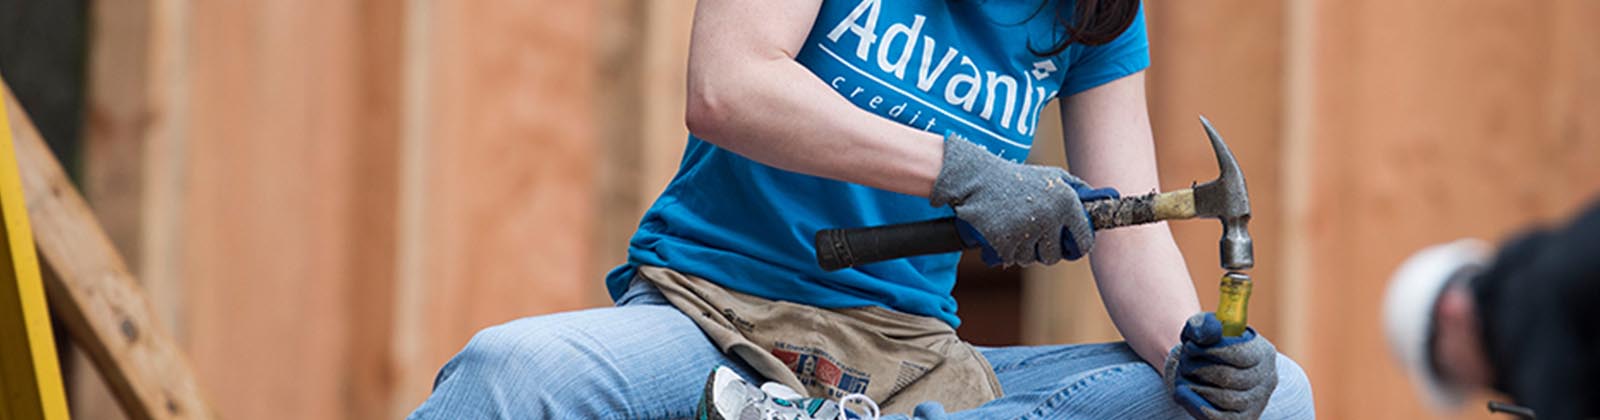 Advantis volunteer using a hammer while volunteering at Habitat for Humanity